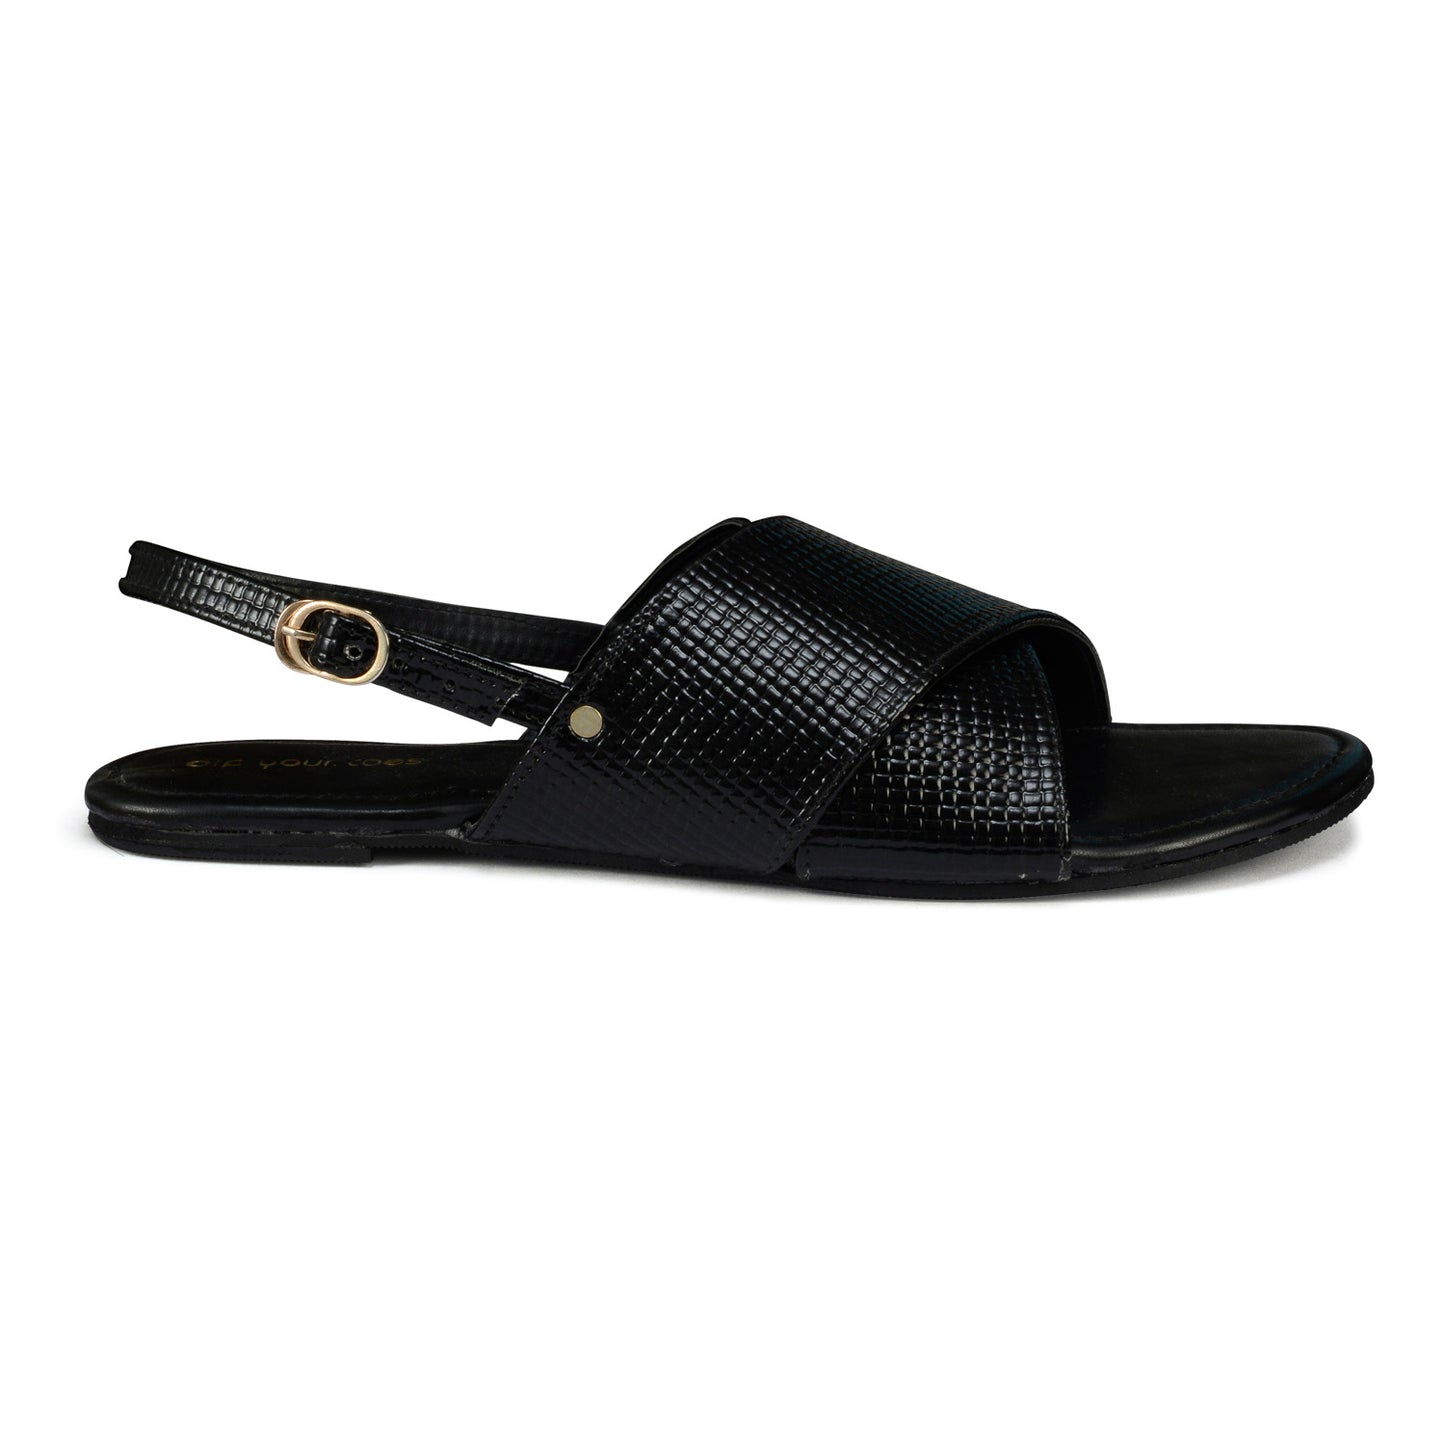 Textured Cross strap sandals